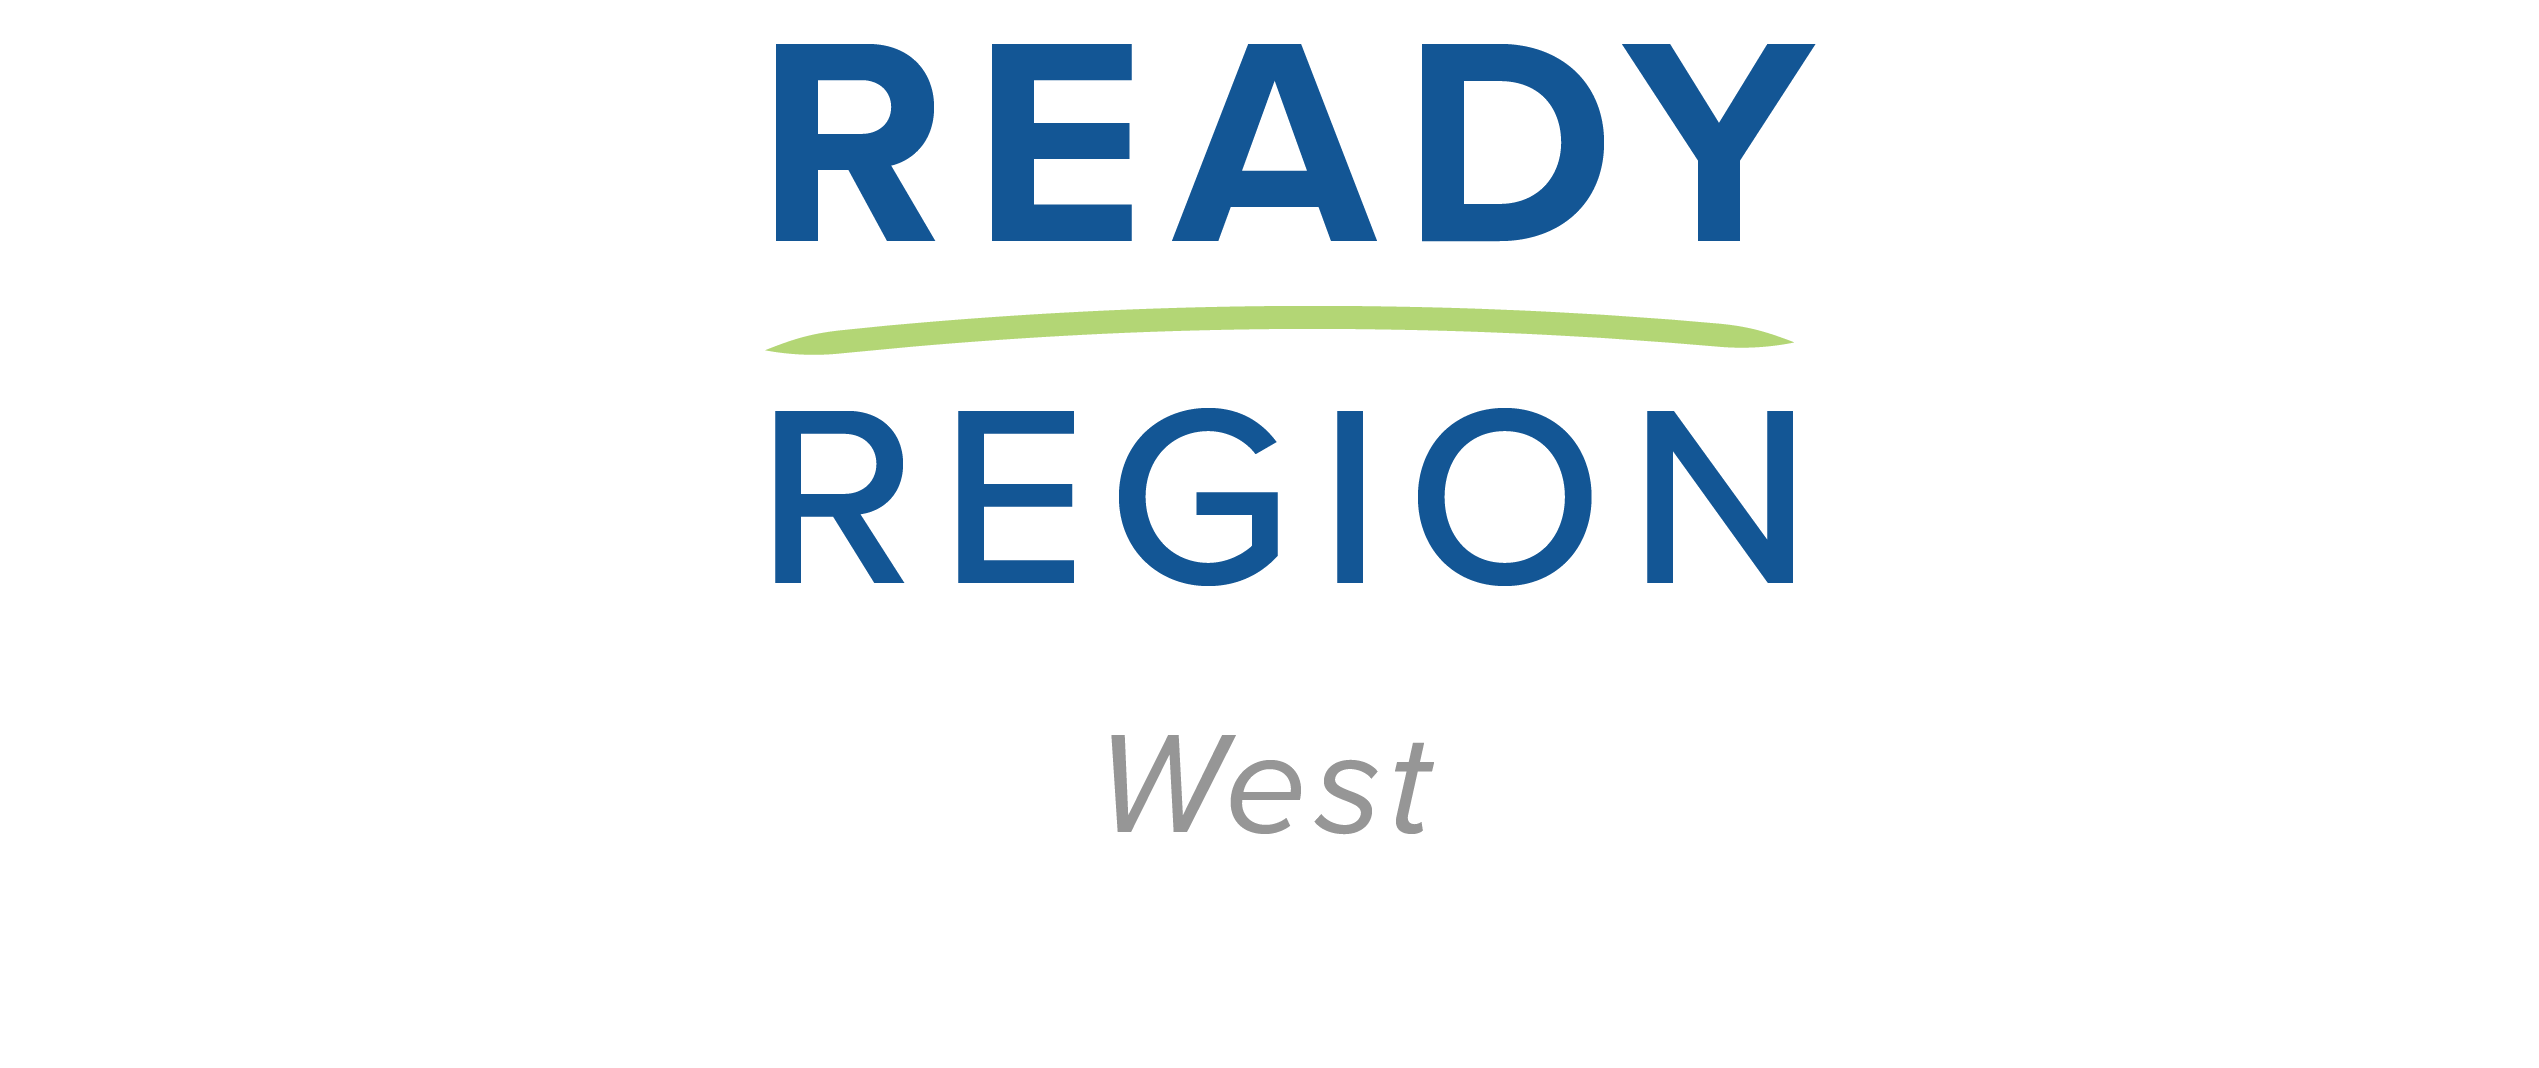 Ready Region West